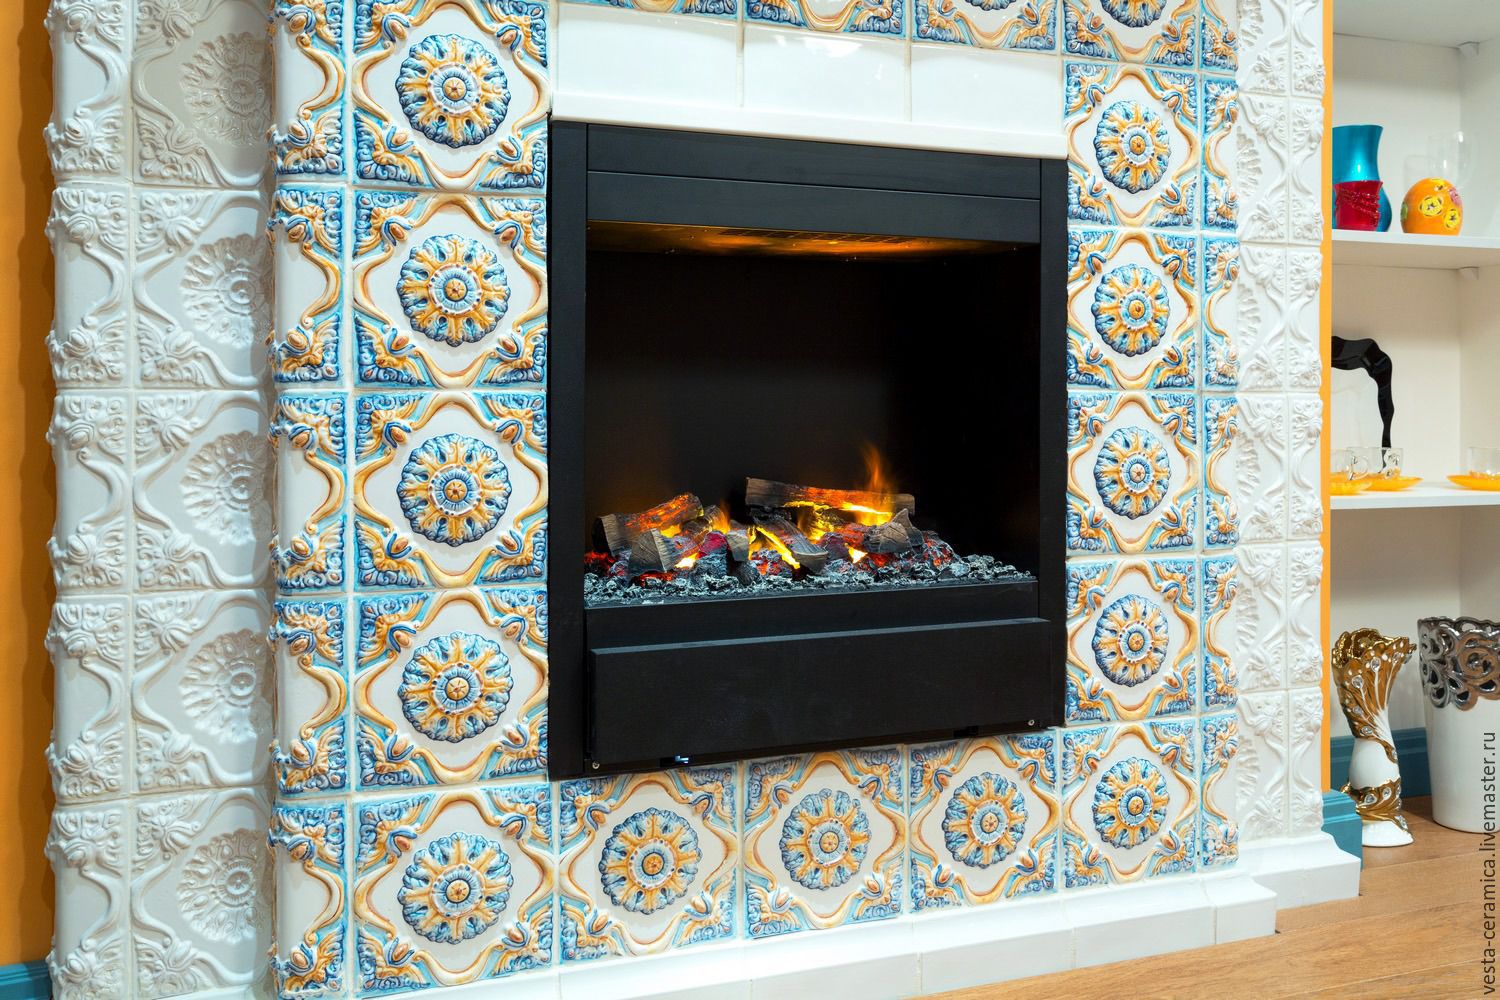 Fireplace Basket Inspirational Tiled Fireplace